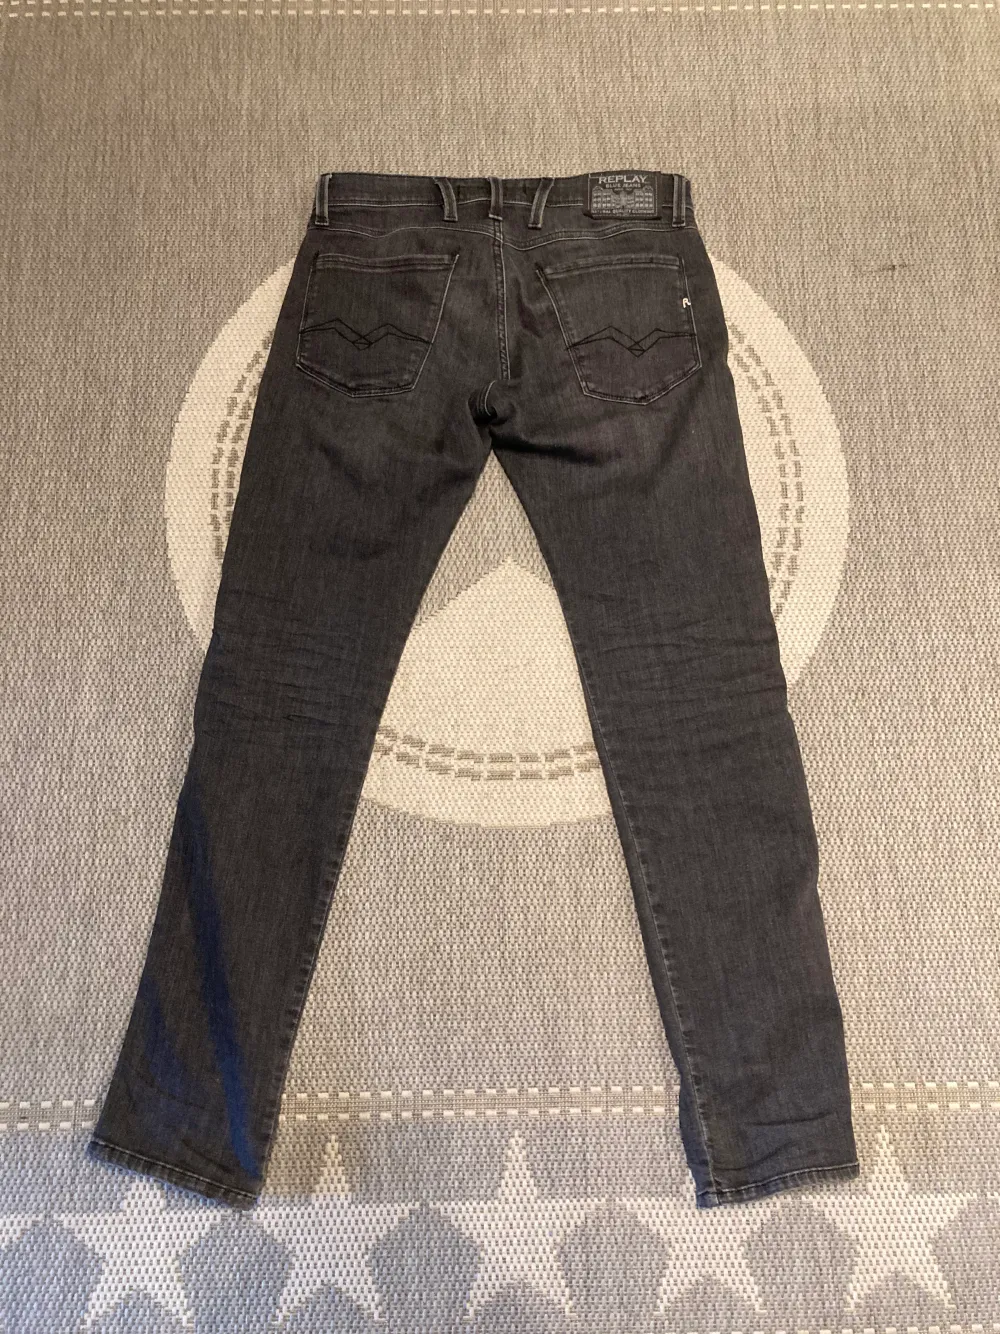 Sköna replay jeans st w30 l32 Nypris ca 1800 . Jeans & Byxor.